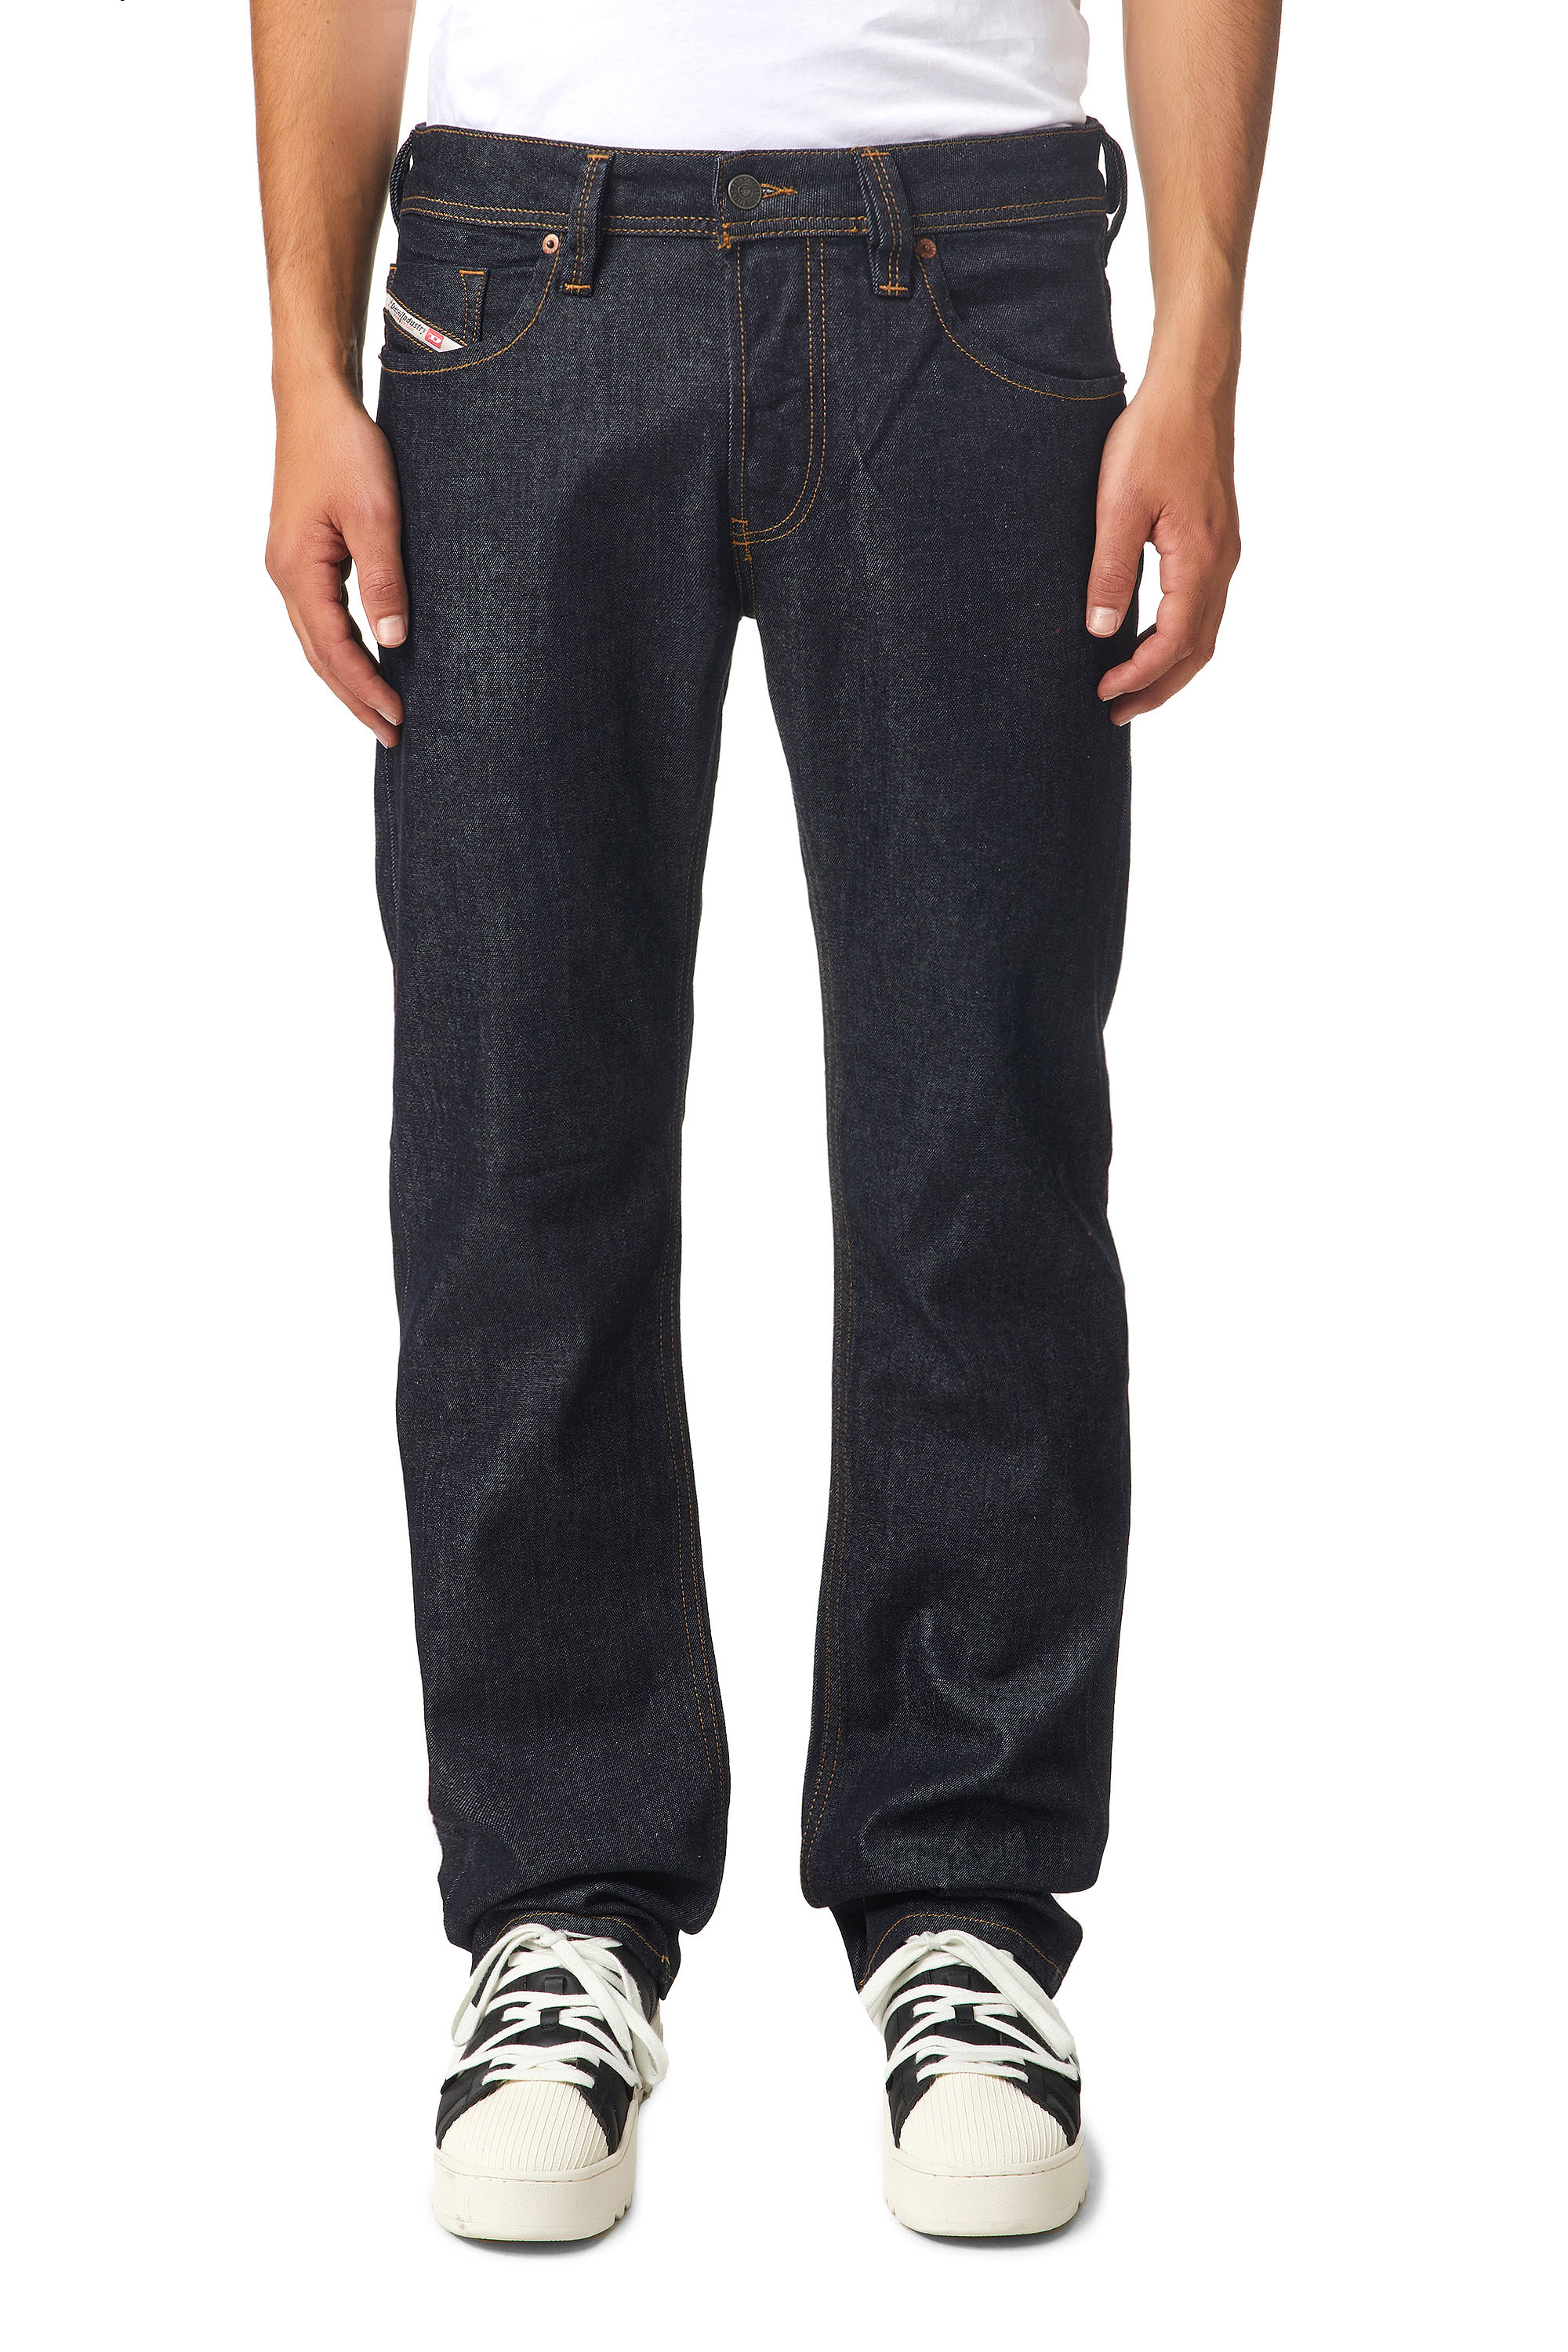 ik draag kleding Gelovige Bondgenoot Diesel Jeans Heren Larkee United Kingdom, SAVE 45% -  loutzenhiserfuneralhomes.com